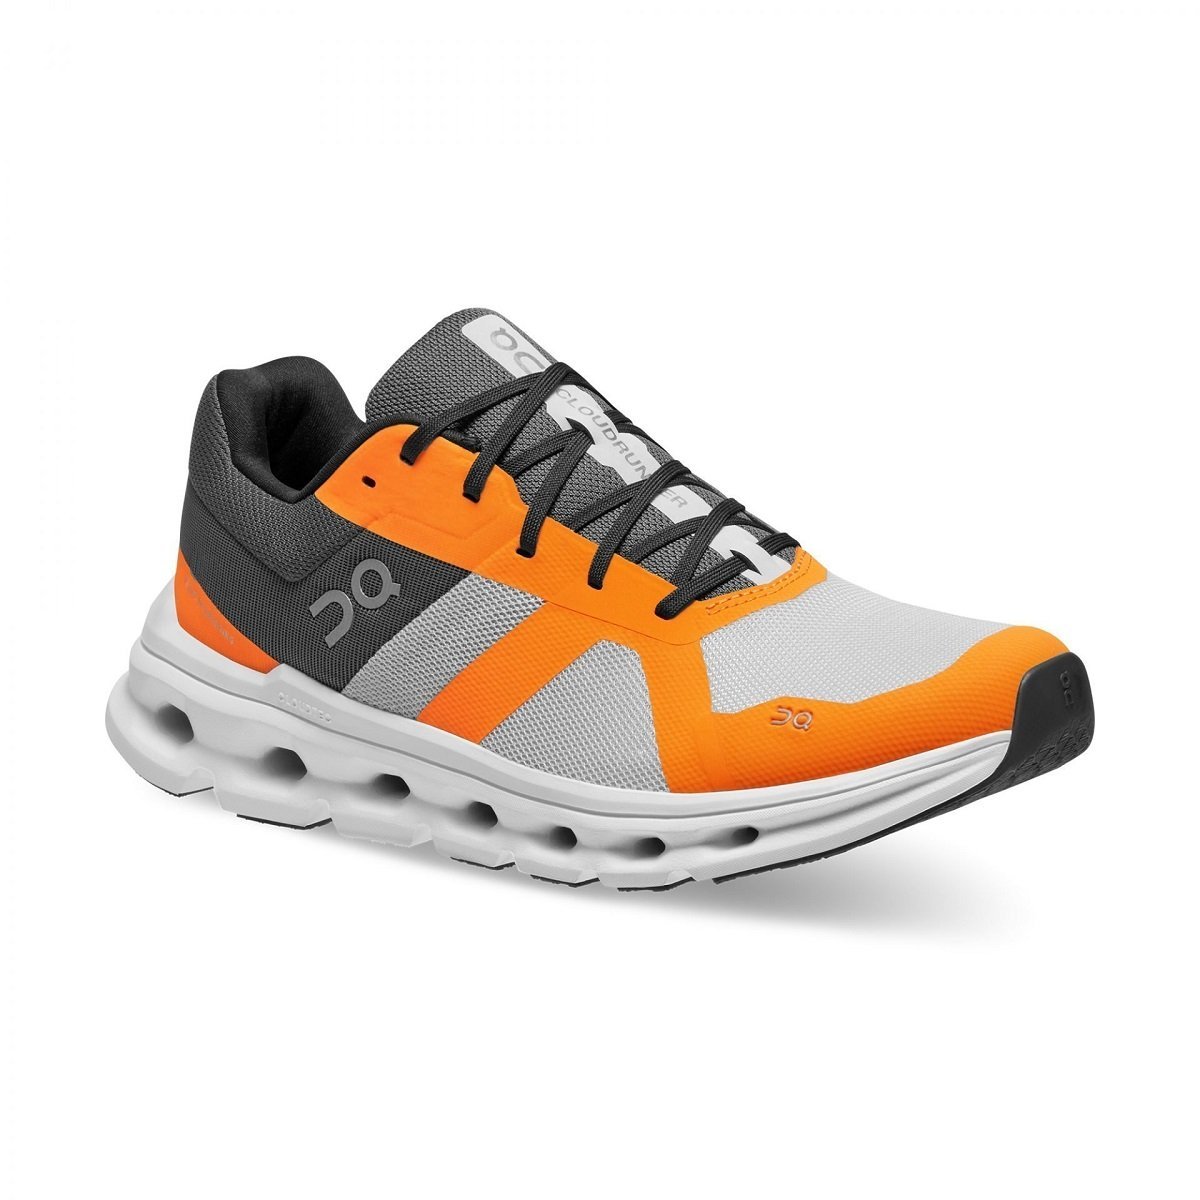 Topánky ON Cloudrunner M - grey/orange